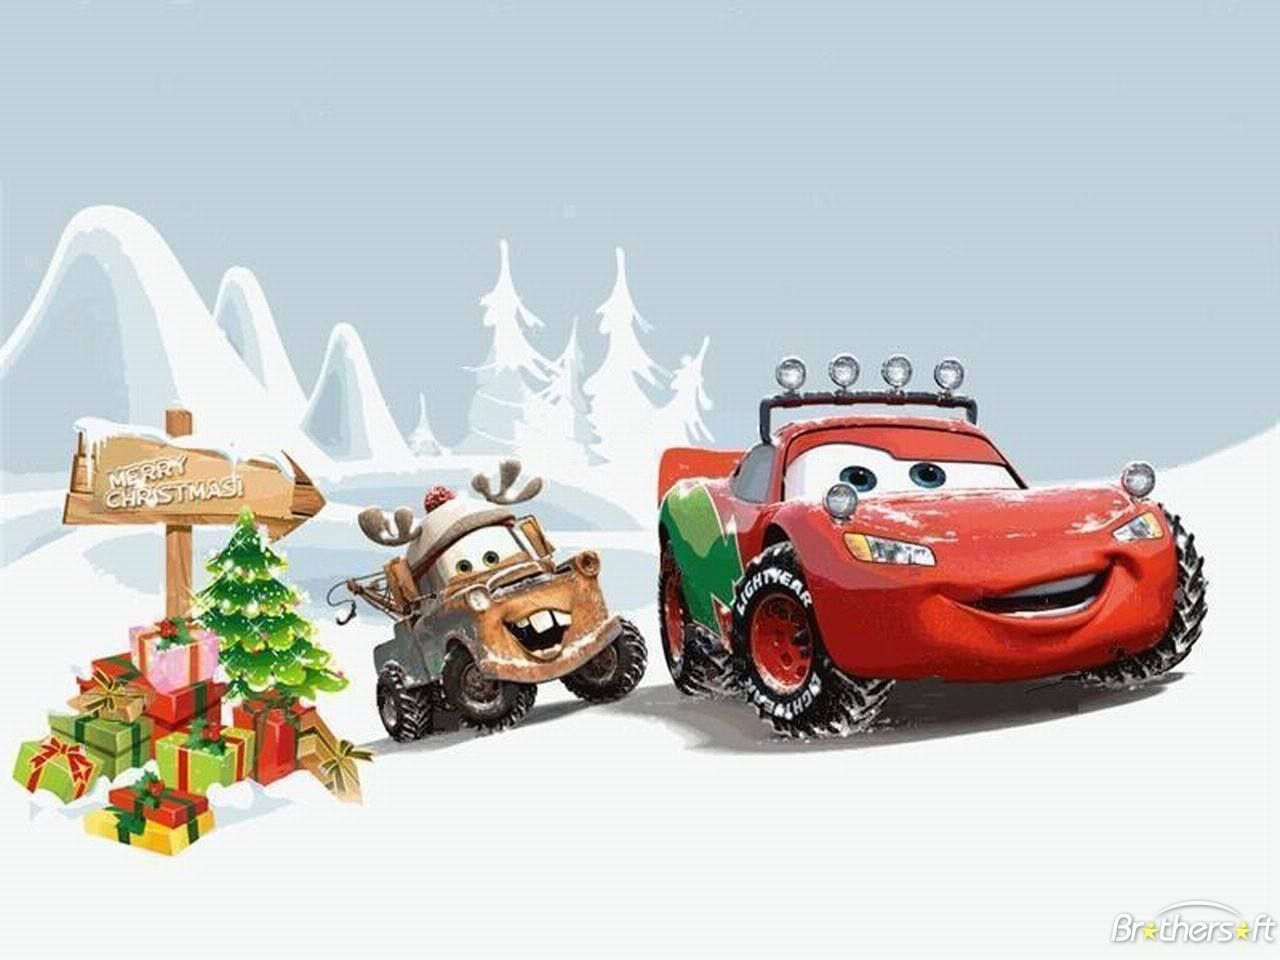 Pixar Christmas Background. Pixar Wallpaper, Disney Pixar Wallpaper and Pixar Christmas Background